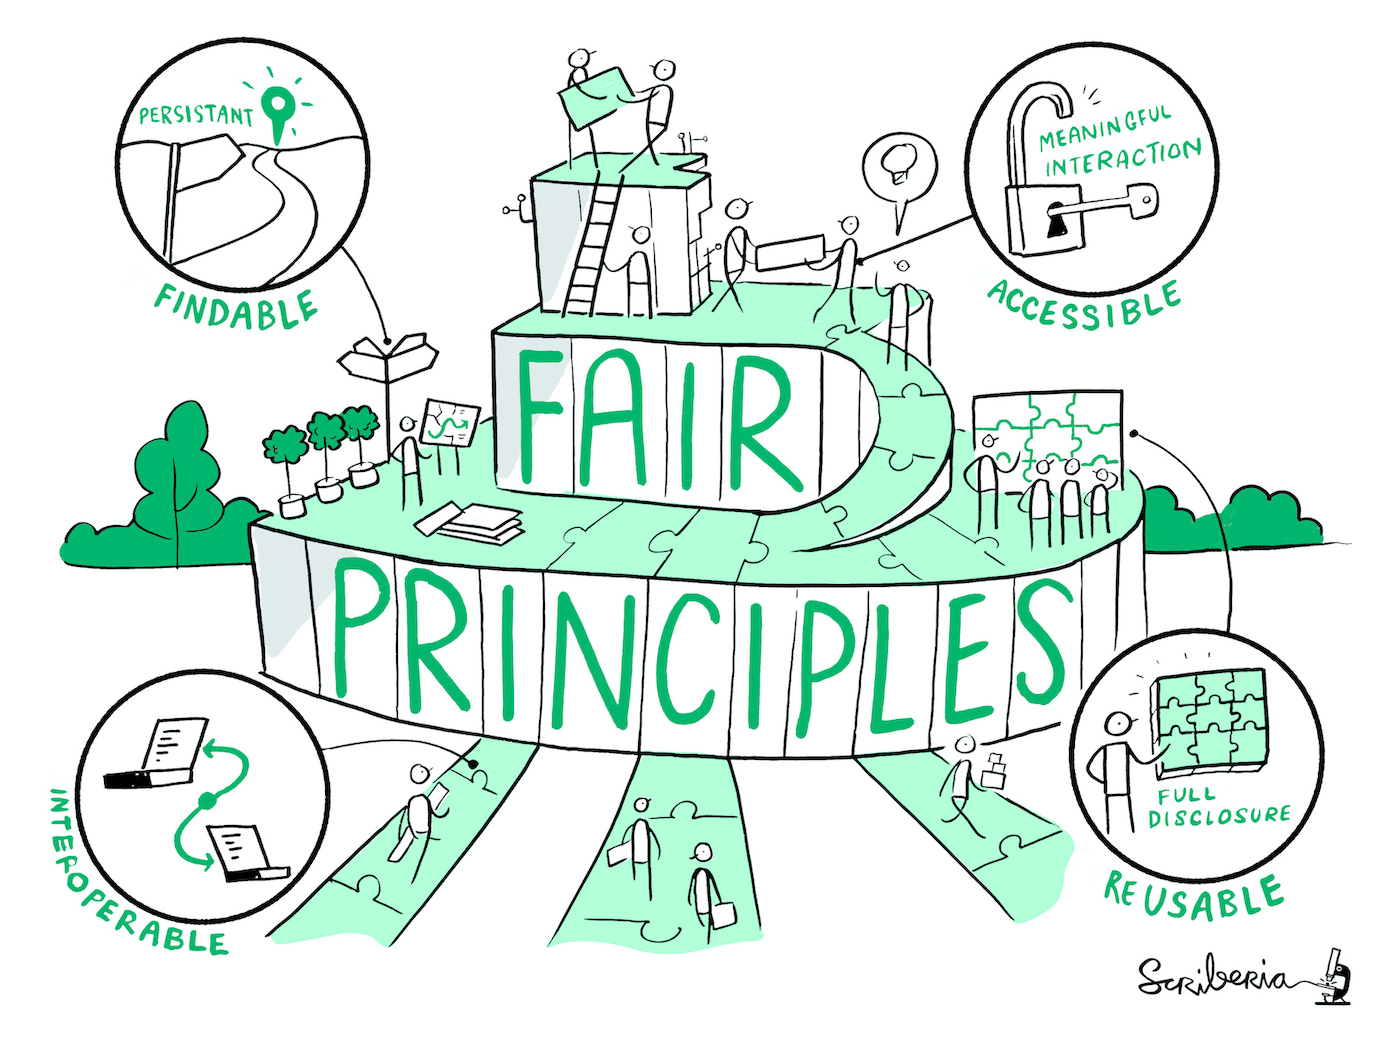 Four FAIR principles depicted.